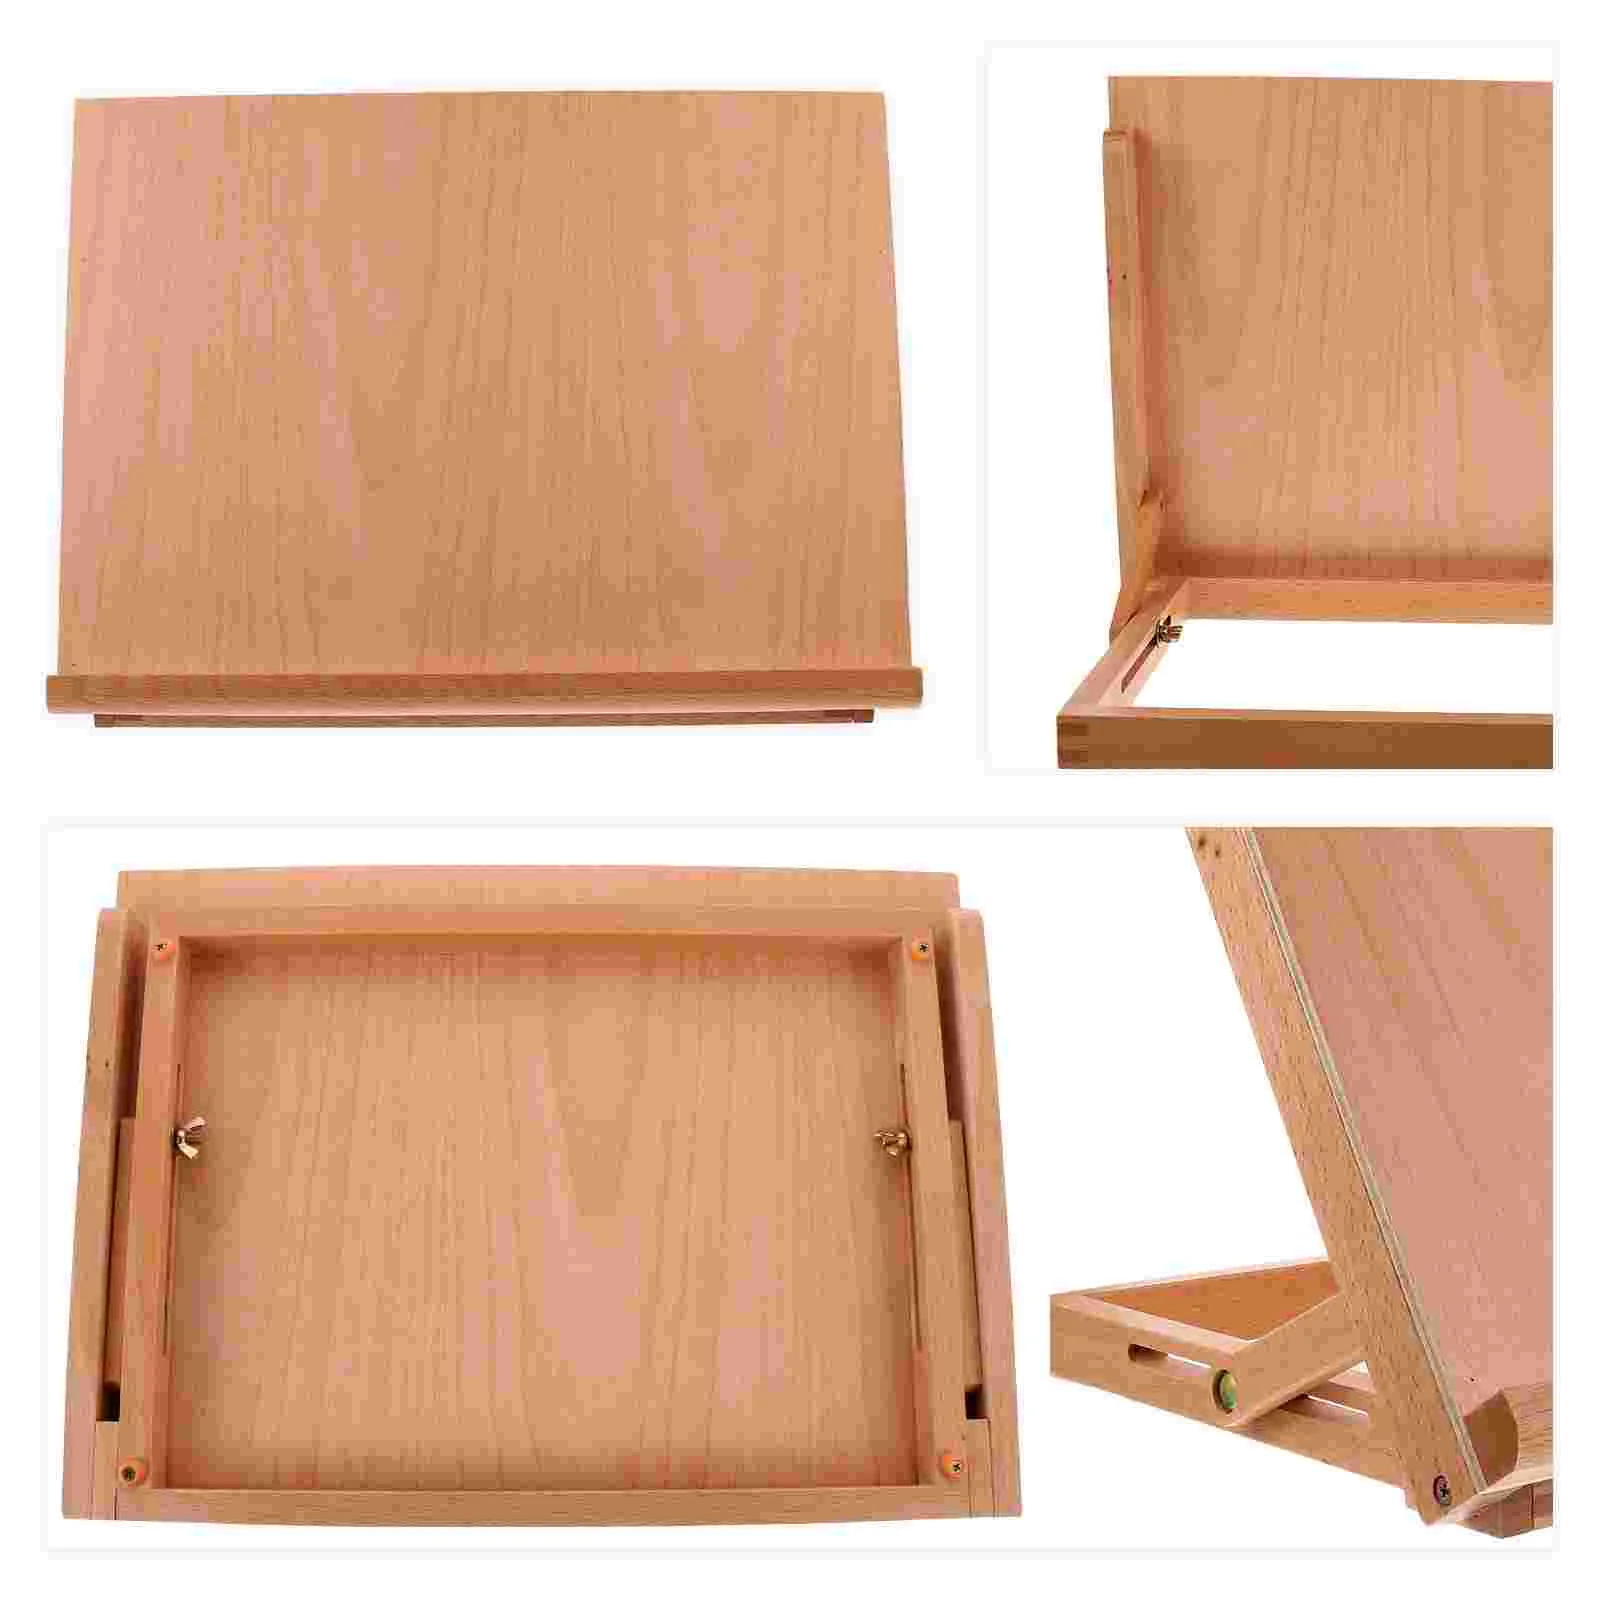 

4 K Folding Desktop Painting Adjustable Rack Artist Drawing Board Wood Tabletop Easel Stand Wooden Sketching Drafting